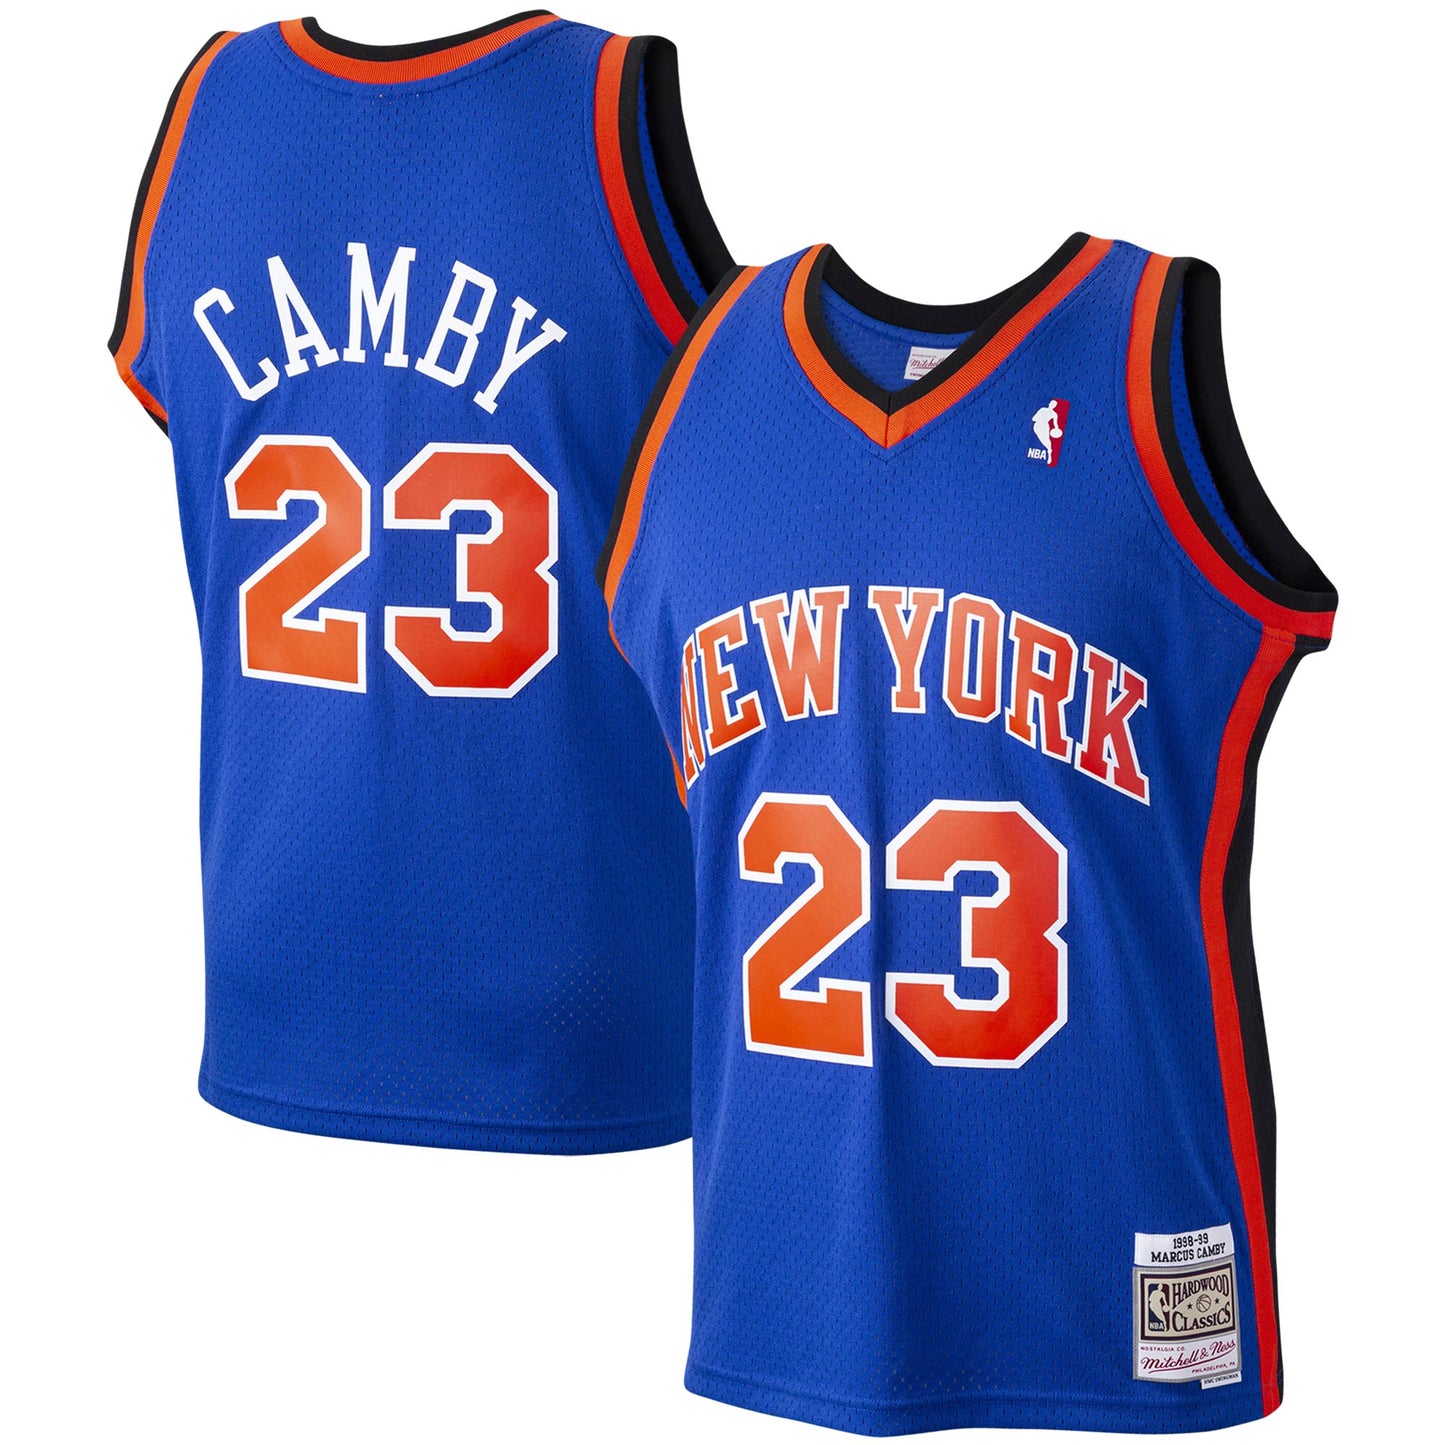 Marcus Camby New York Knicks Mitchell & Ness Hardwood Classics Swingman Jersey - Blue